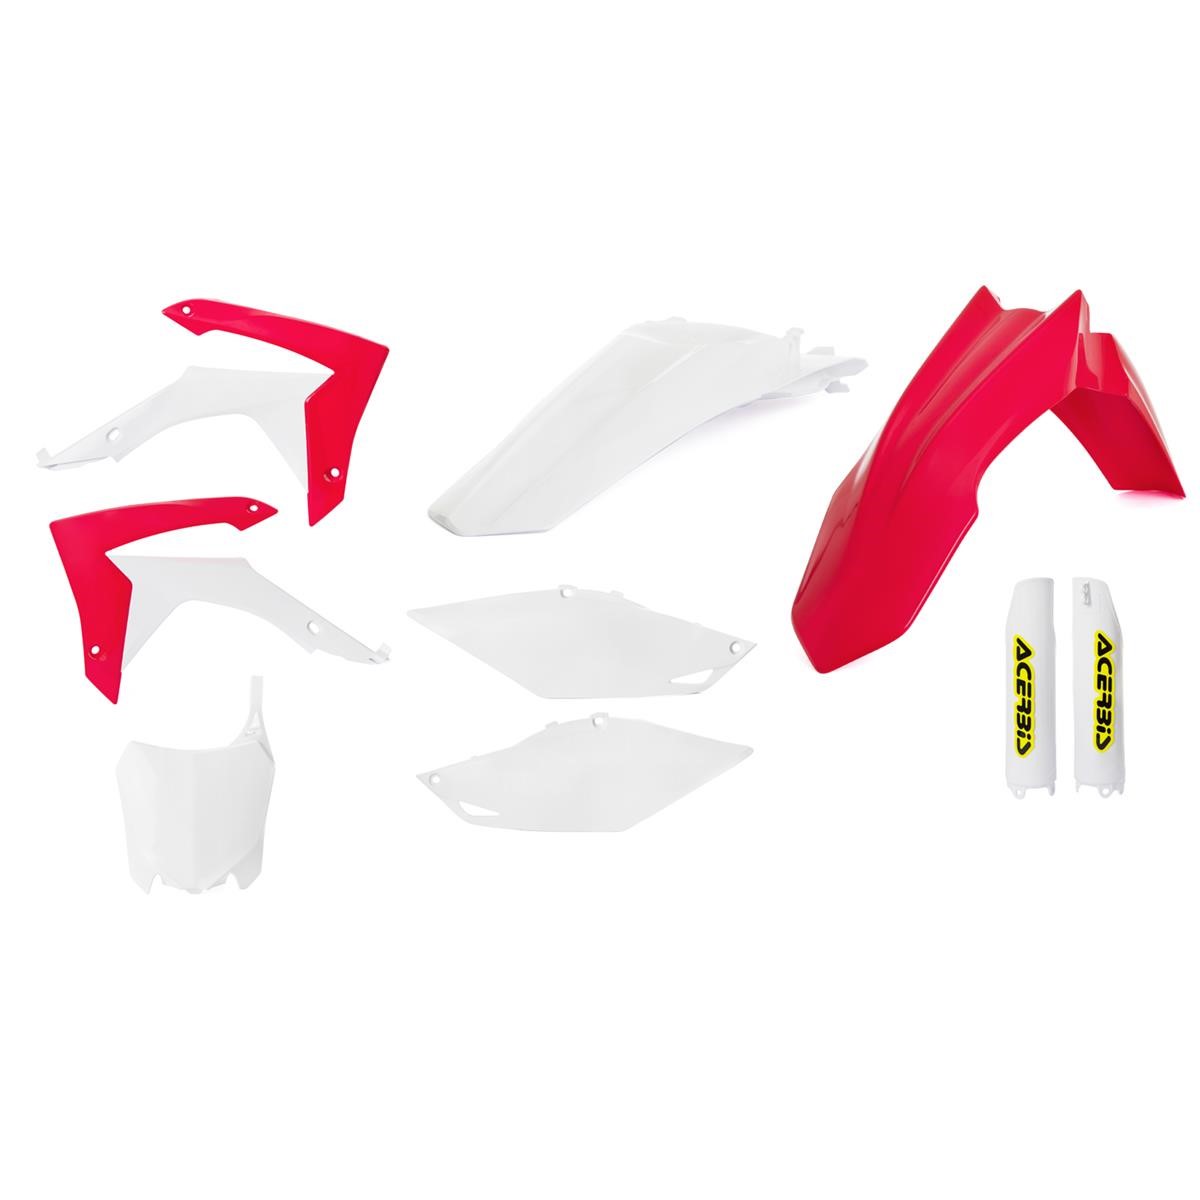 Acerbis Kit Plastique complet Full-Kit Honda CRF 250 14-17, CRF 450 13-16, Replica